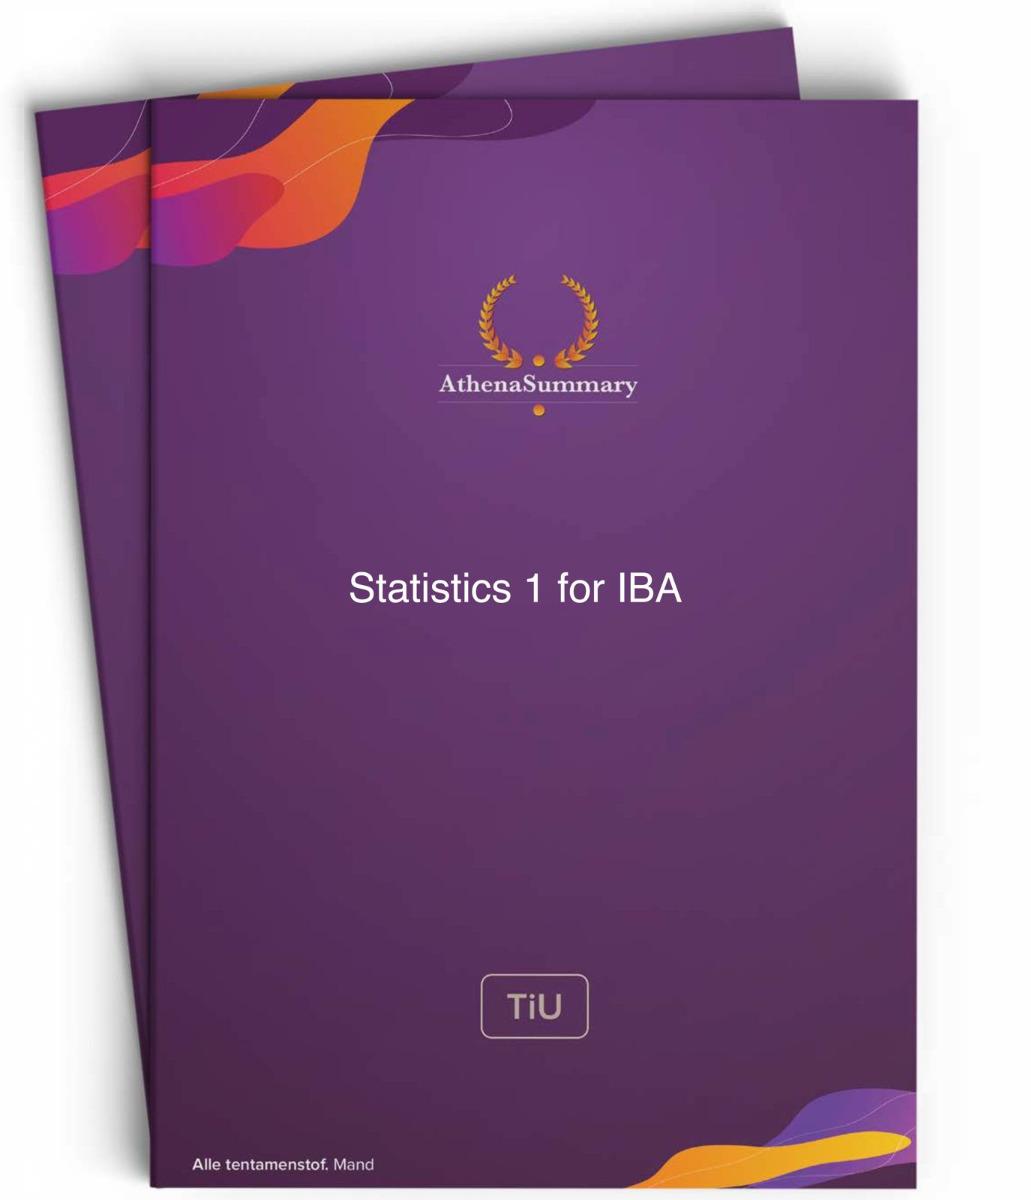 Literature Summary: Statistics 1 for IBA